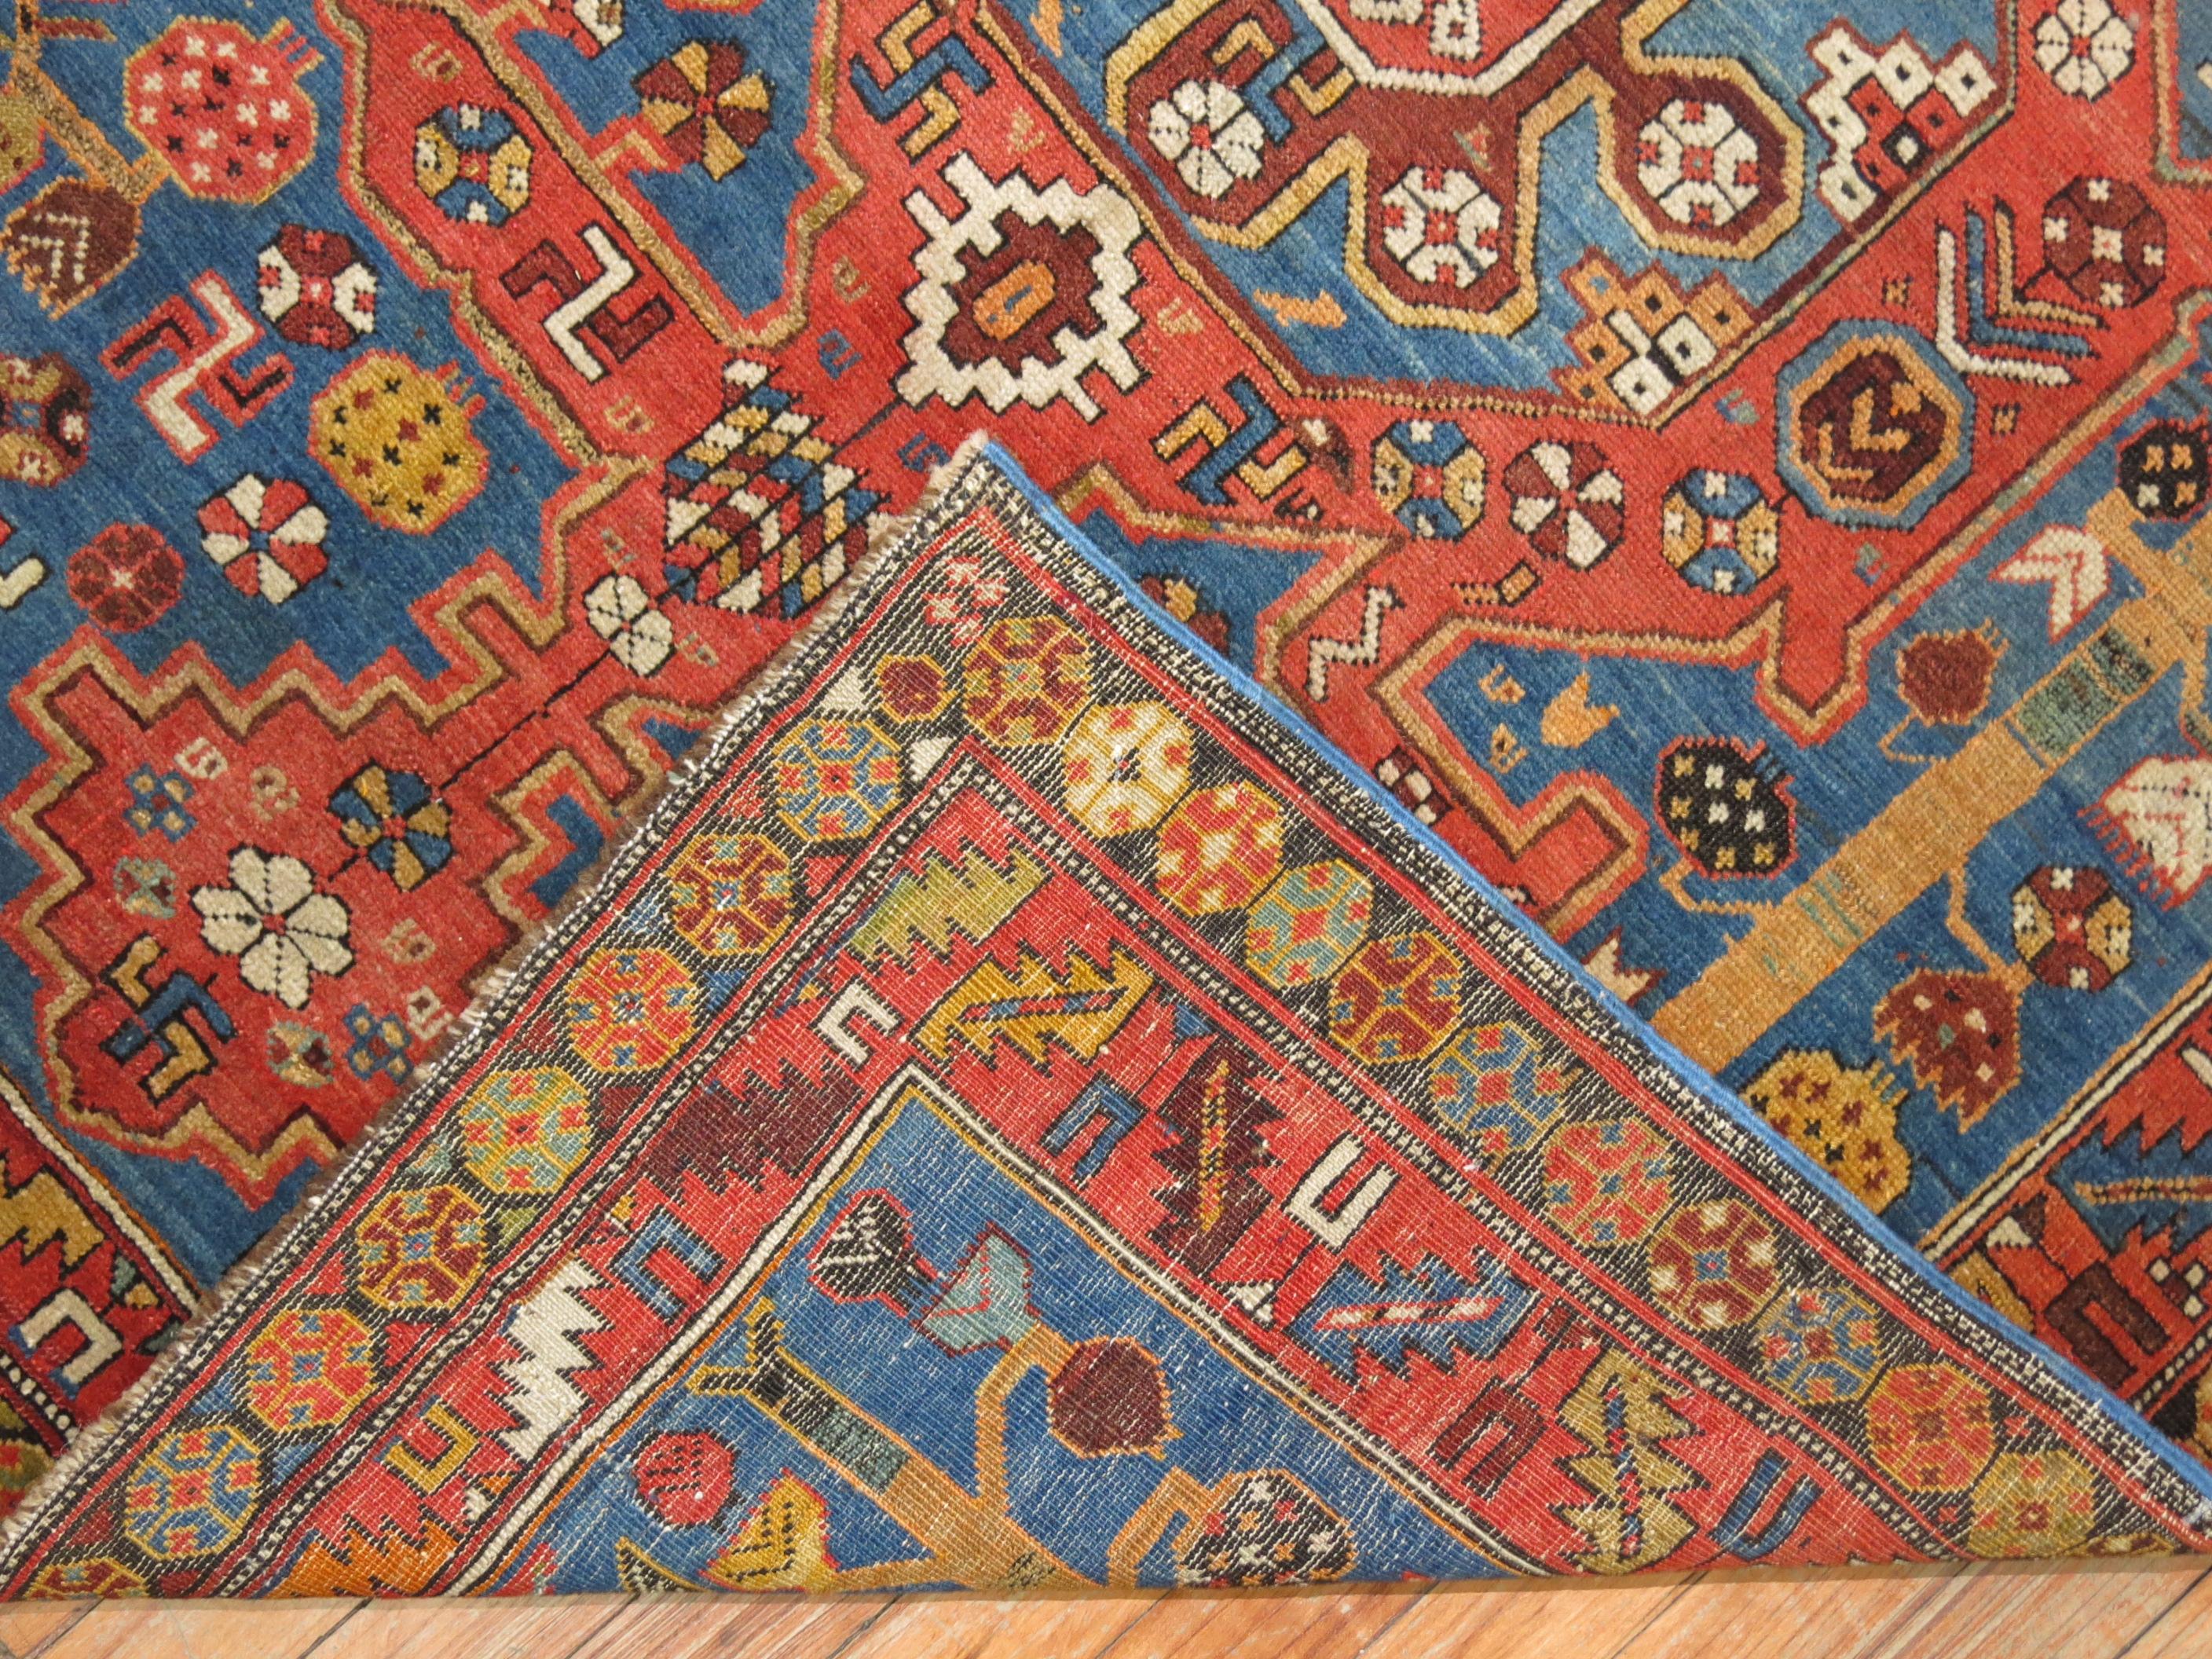 An early 20th century highly decorative Caucasian Kuba rug.